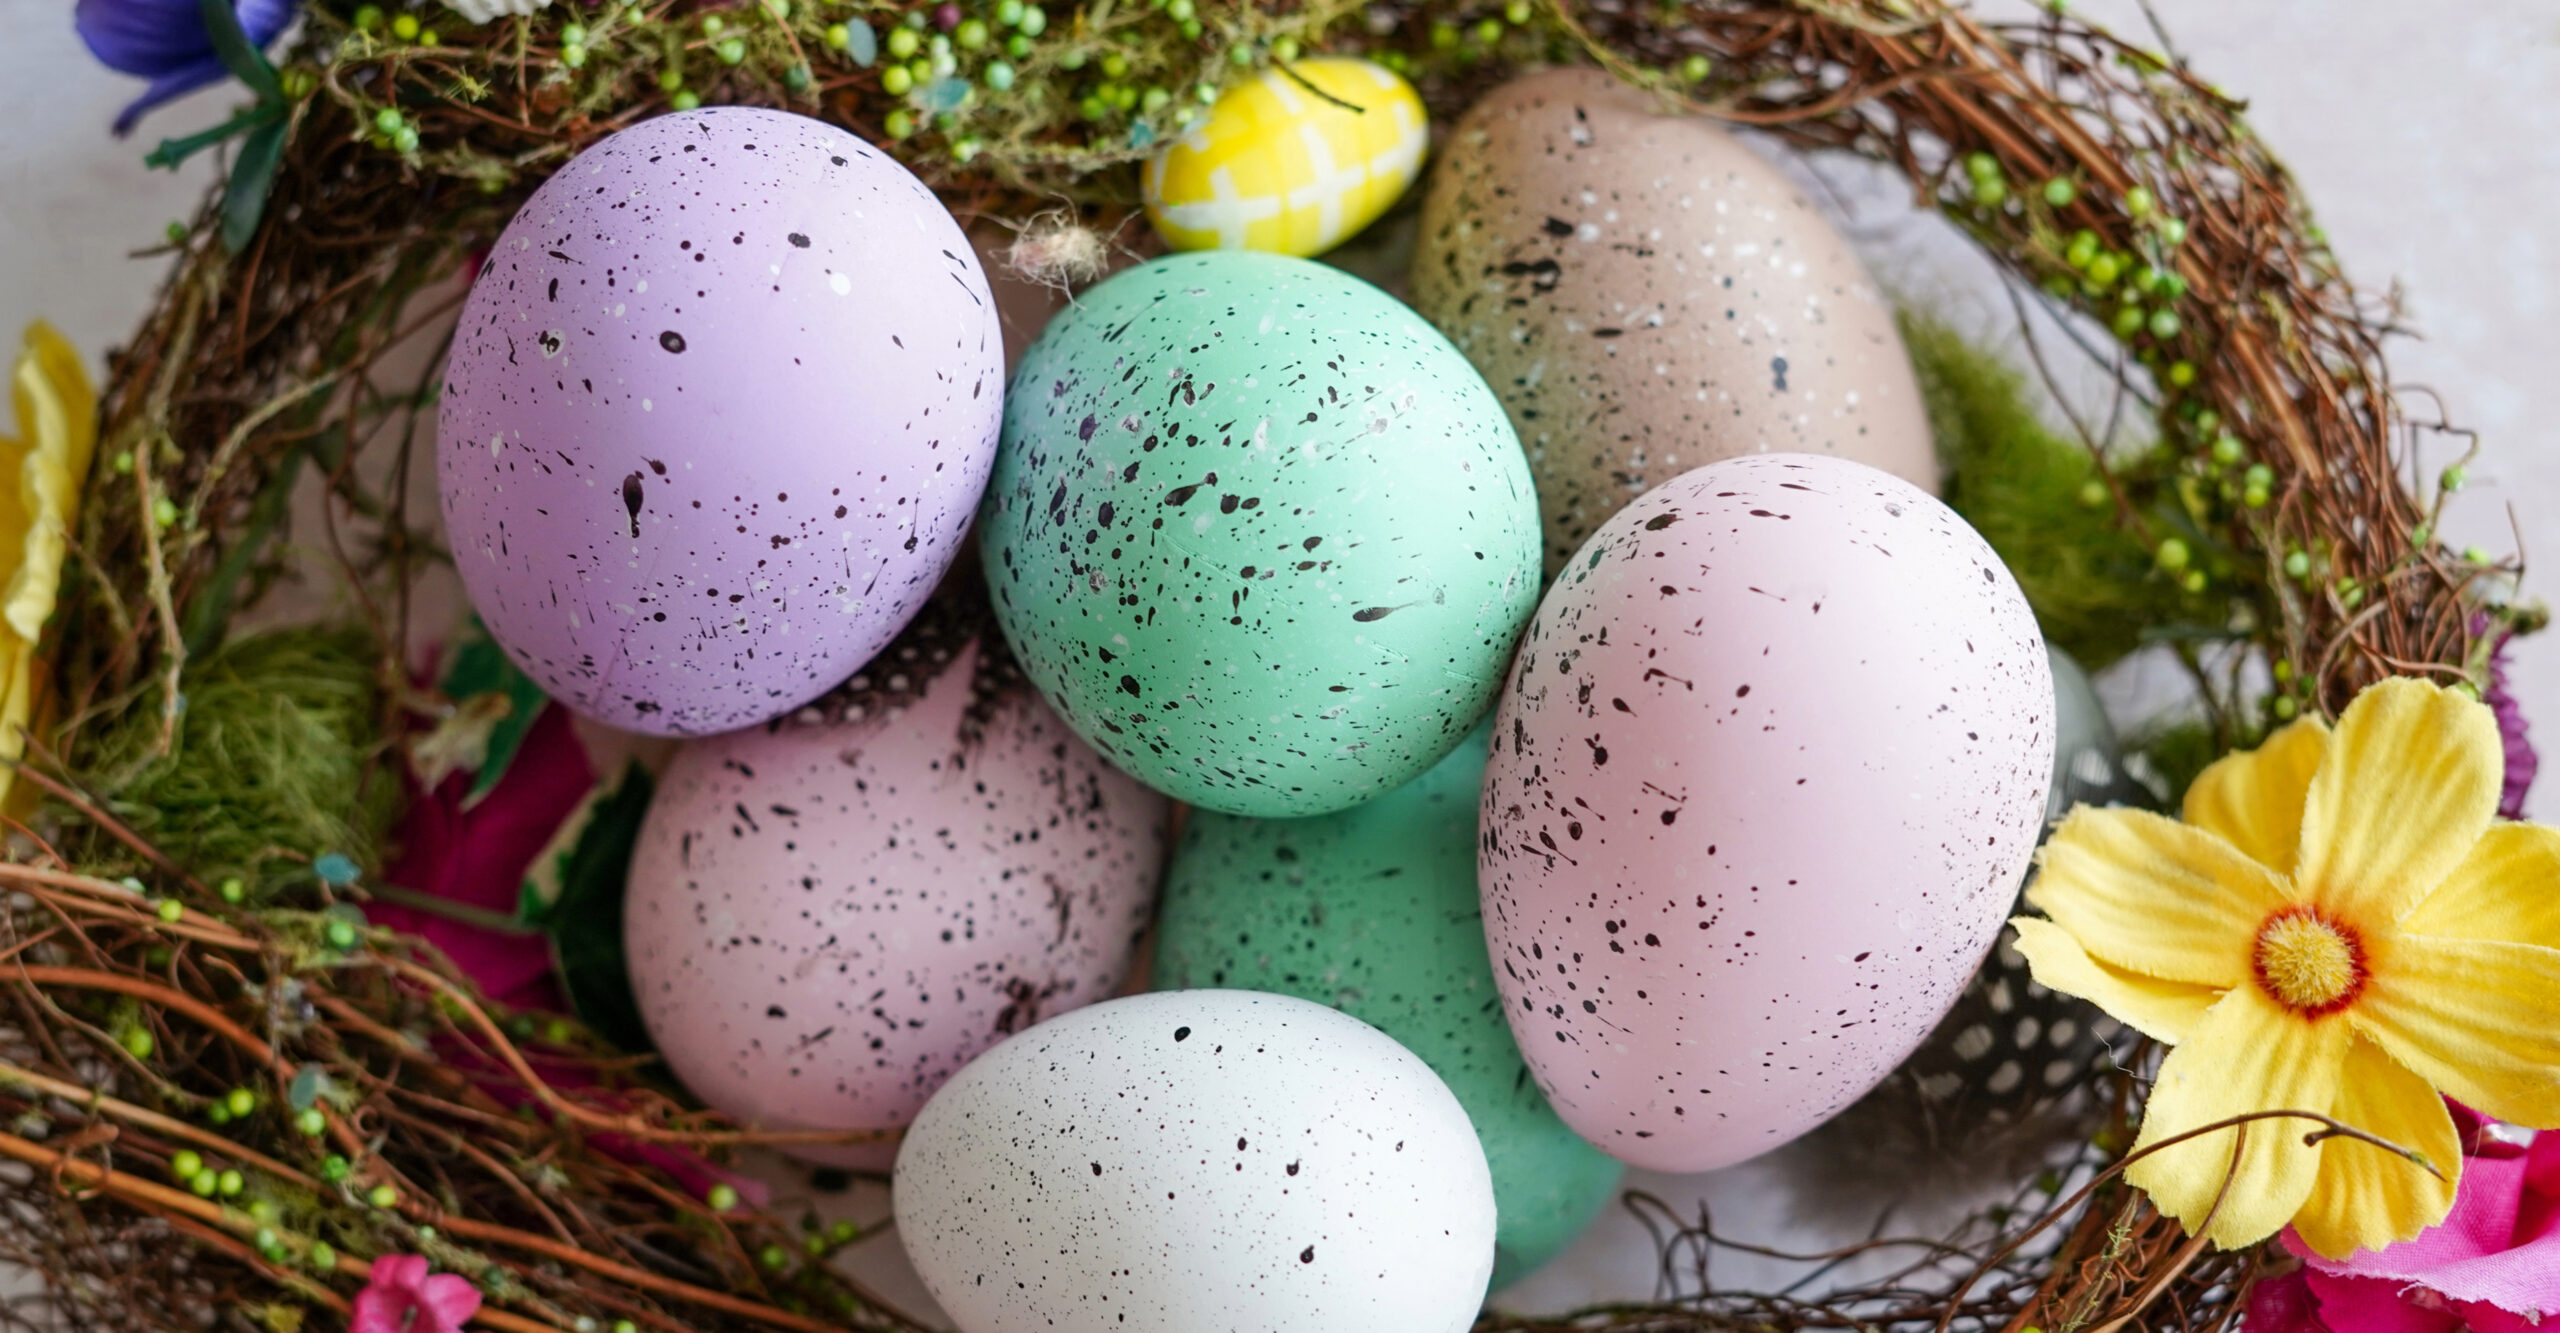 Basket of eggs for an Easter egg hunt in Nashville, Tennessee.